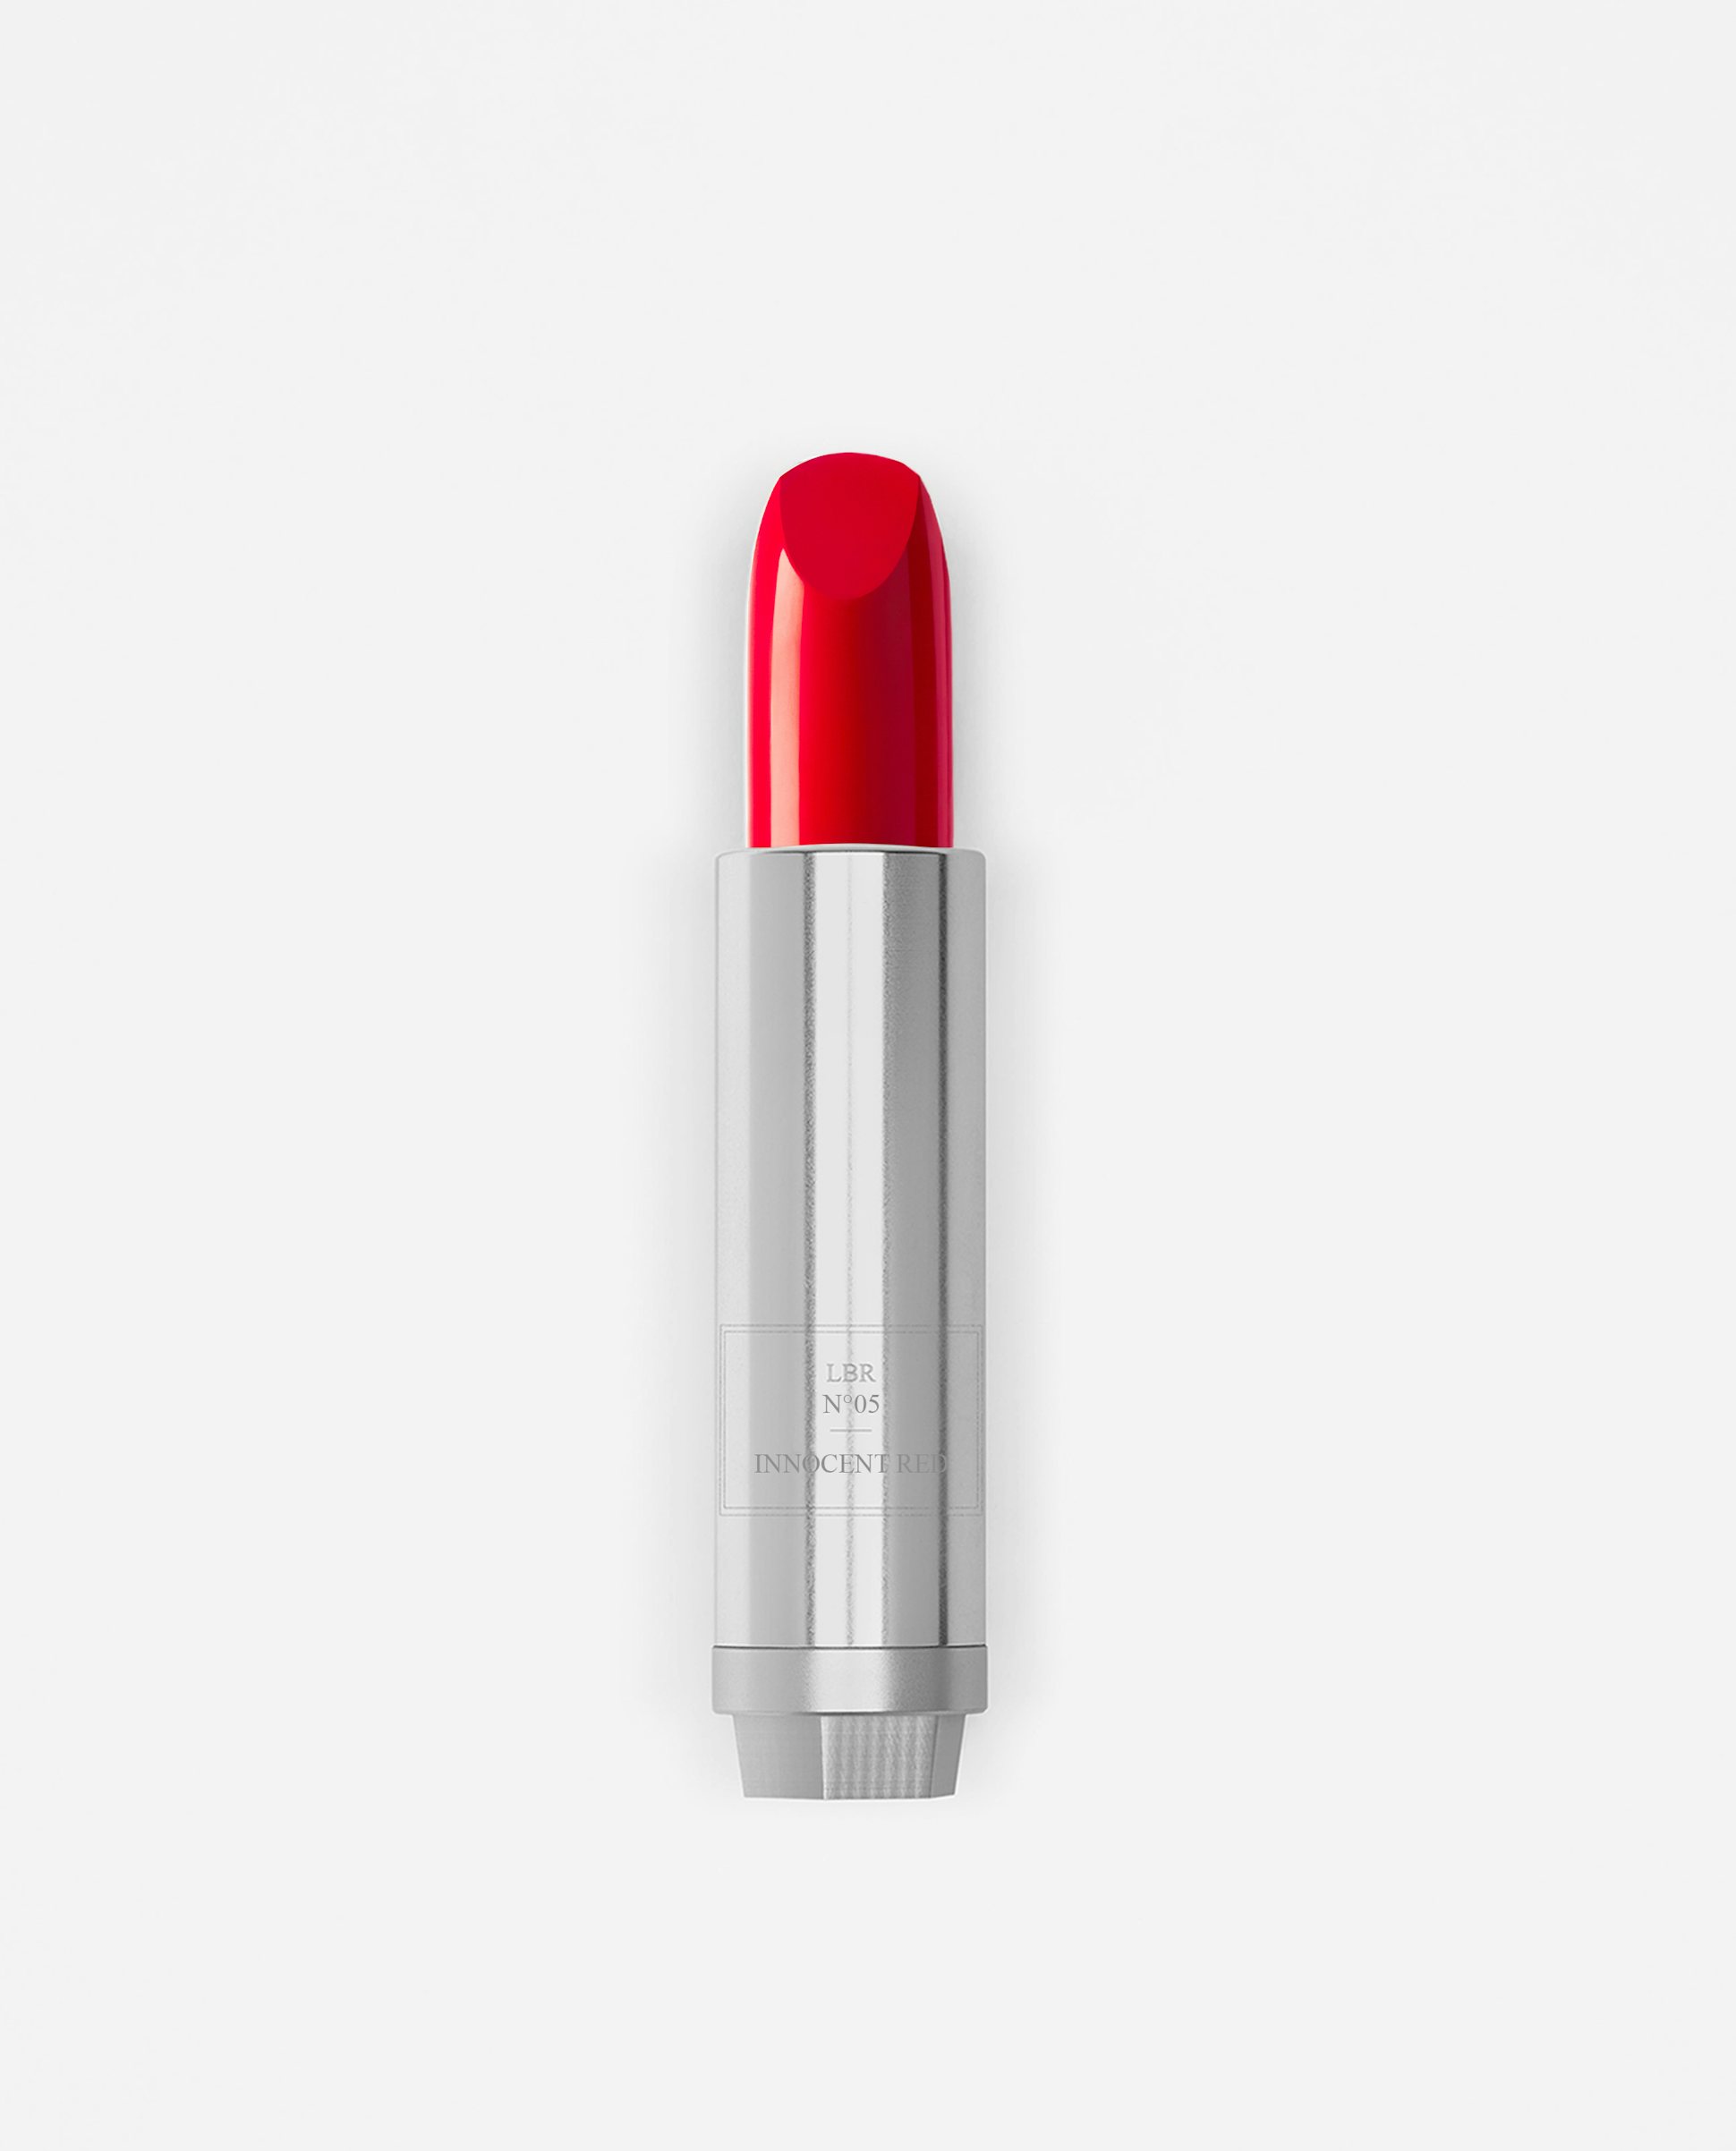 La bouche rouge Innocent Red lipstick in metal refill